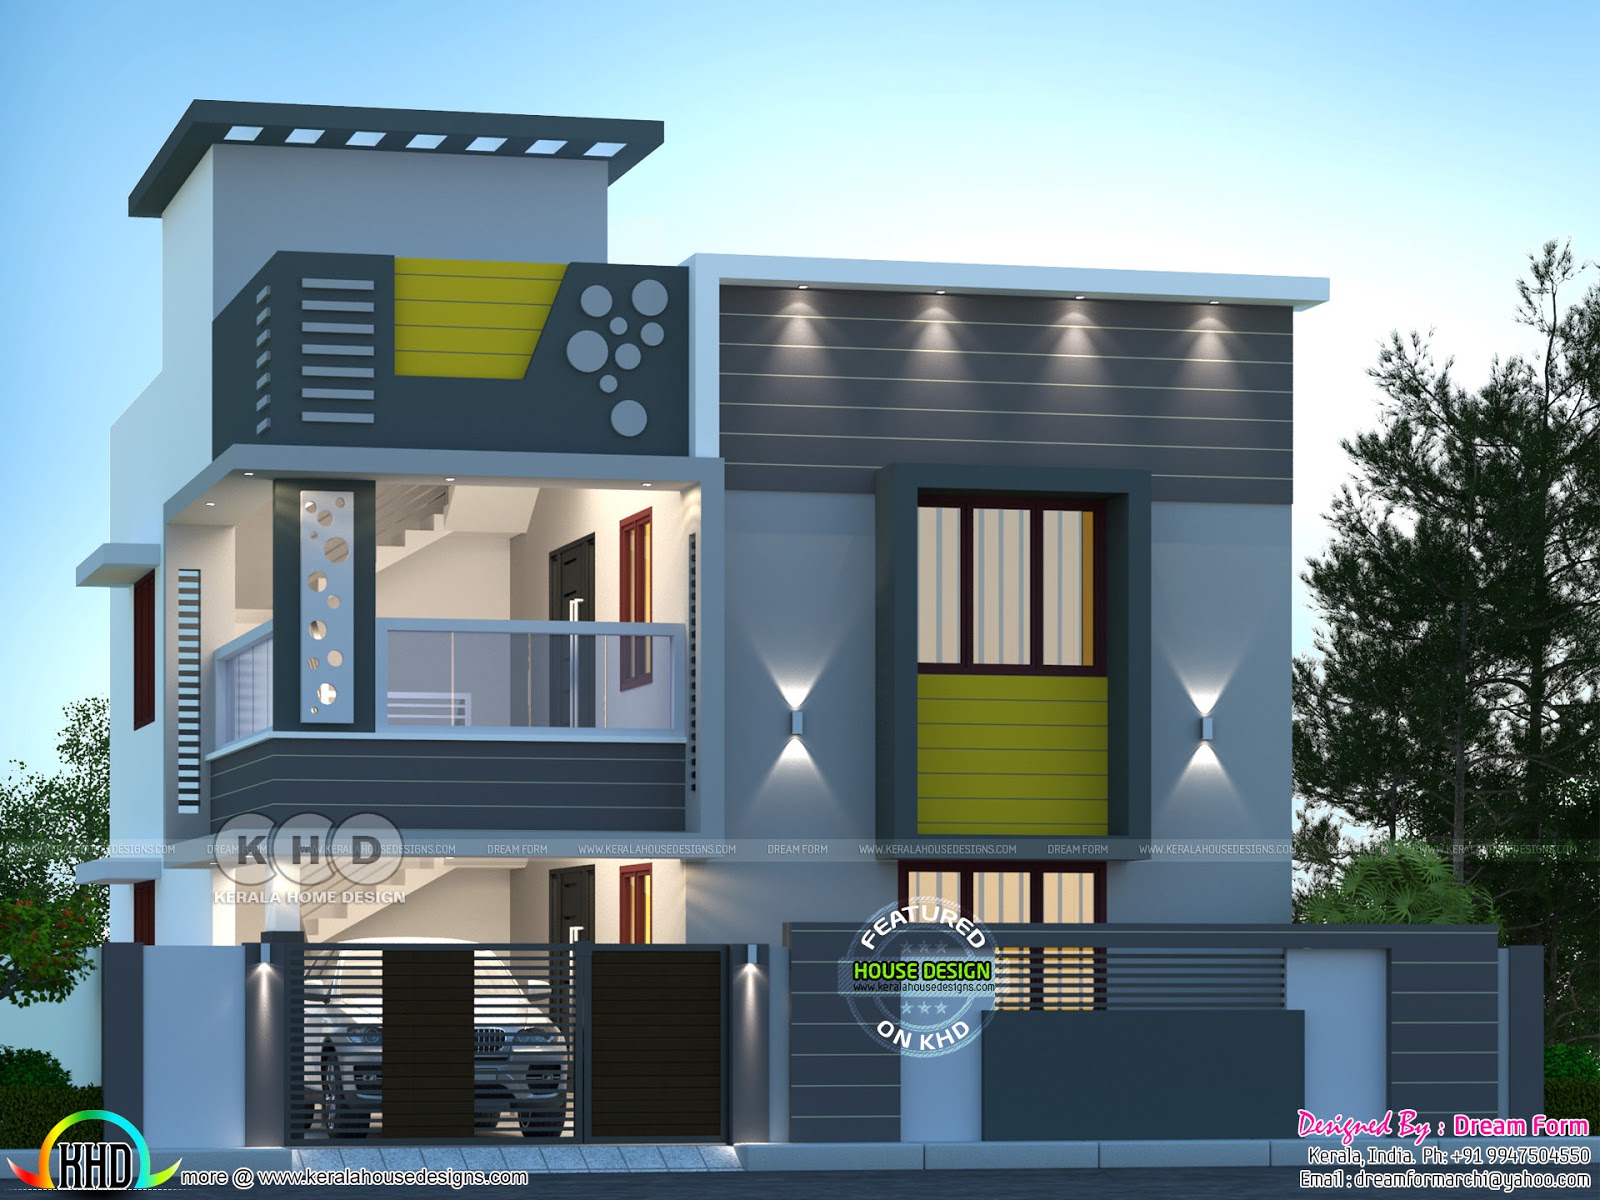 4 Bedrooms 2500 Sq Ft Duplex Modern Home Design Kerala Home Design And Floor Plans 8000 Houses